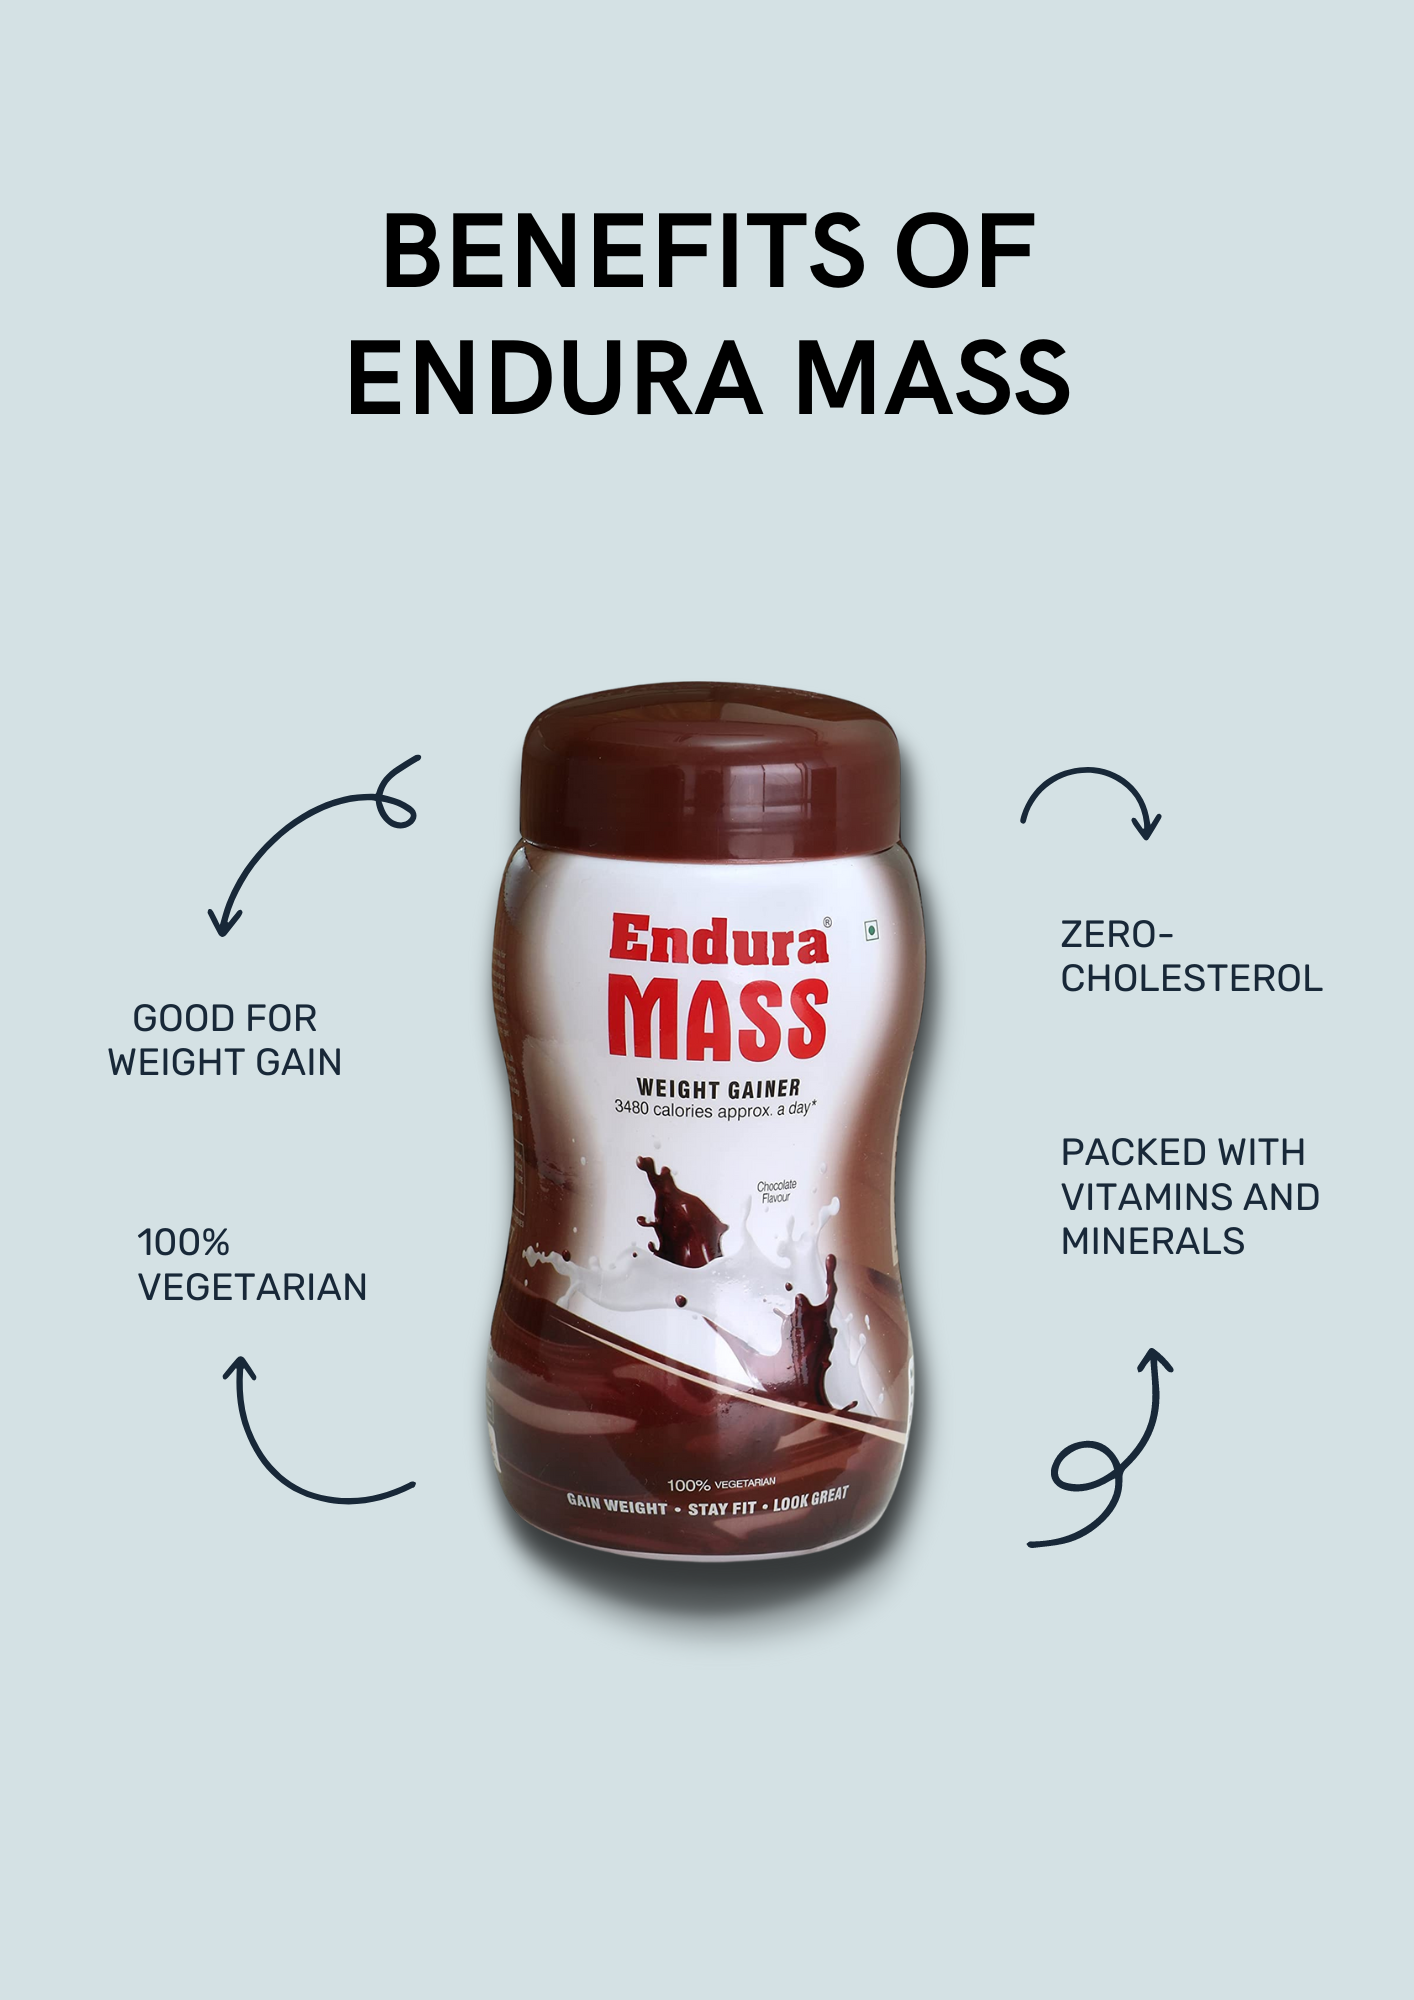 Benefits of endura mass